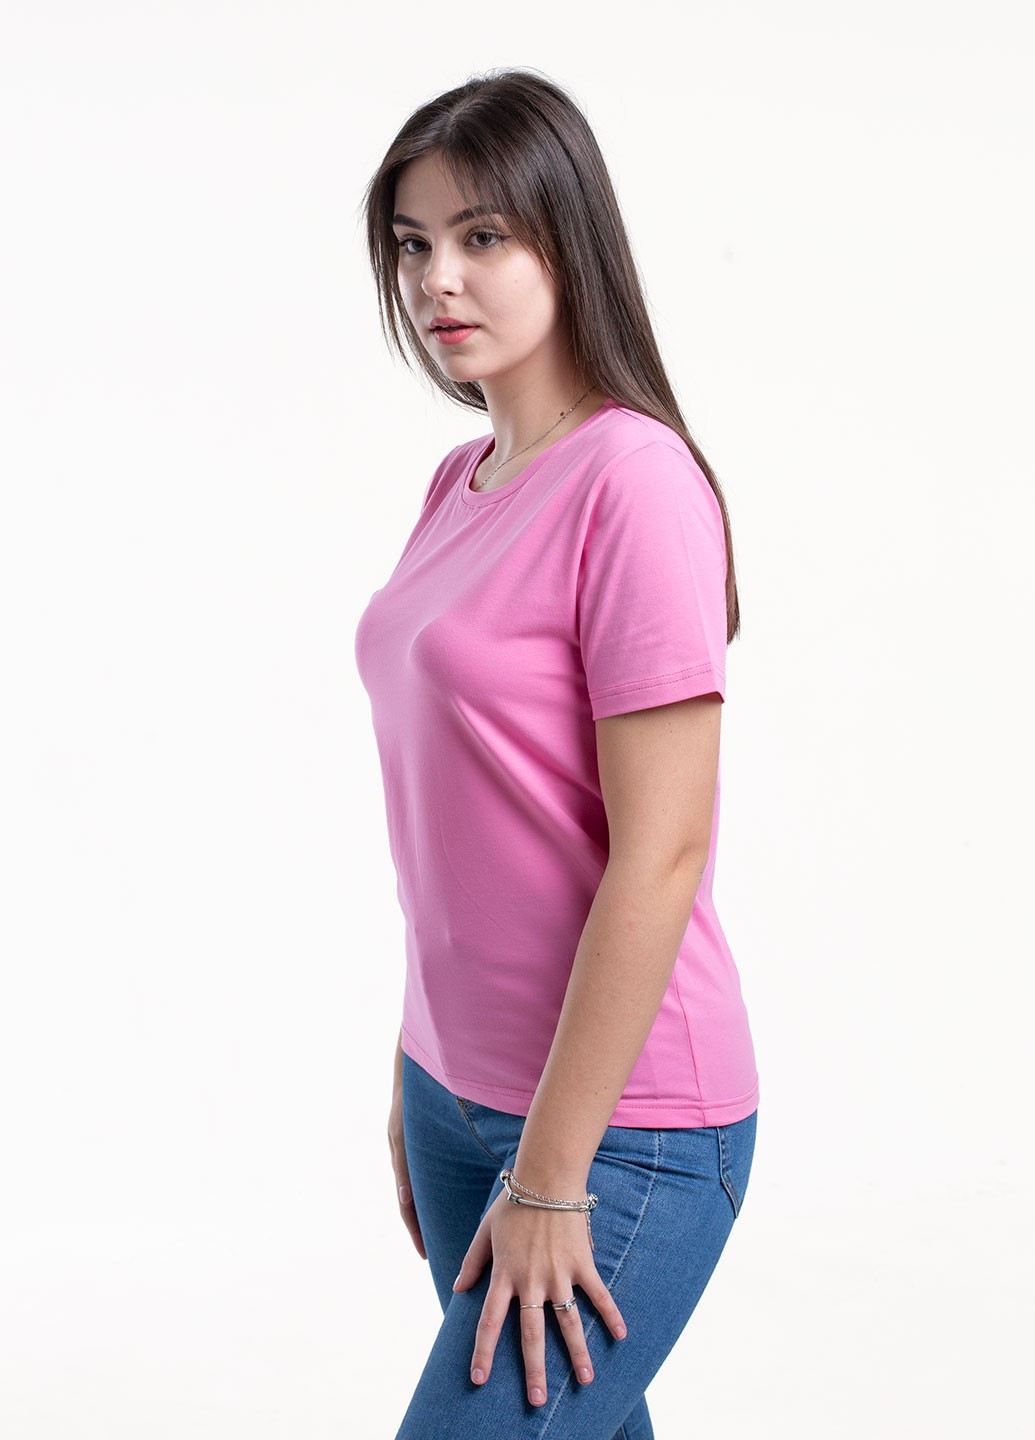 Рожева всесезон футболка жіноча Наталюкс 41-2357